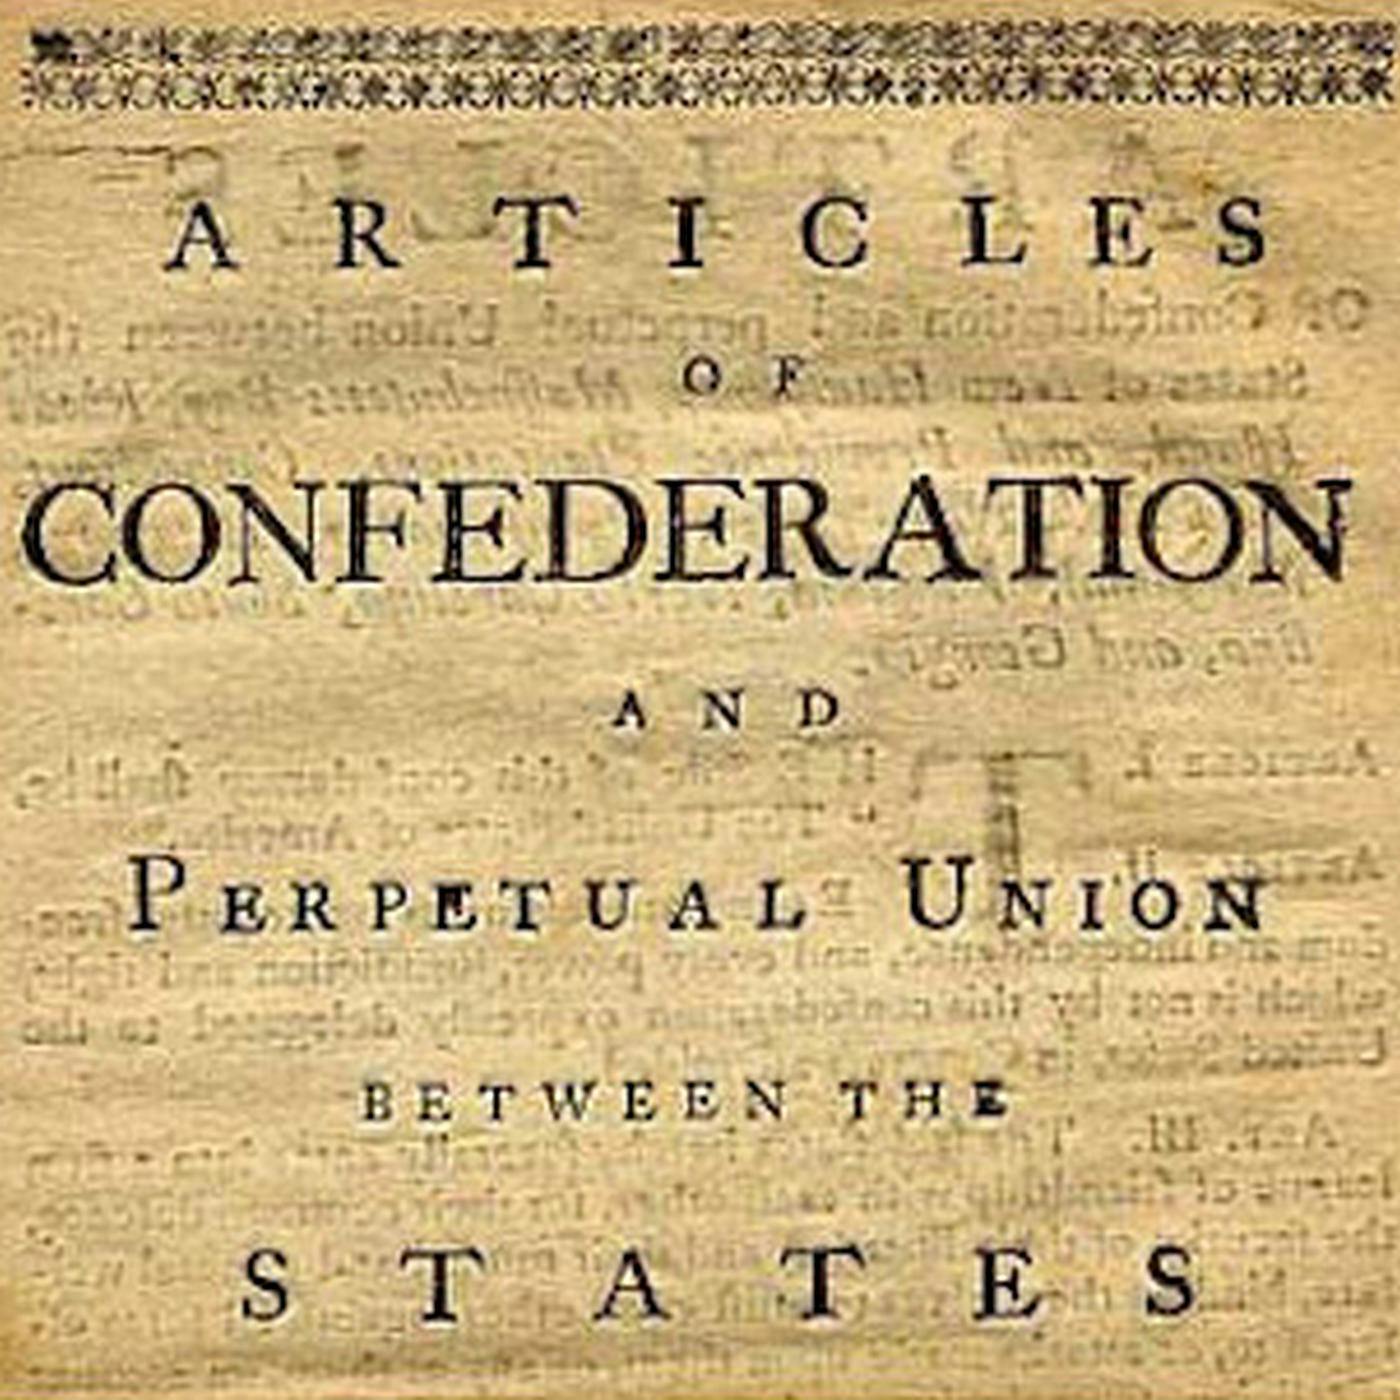 ARP169 Articles of Confederation